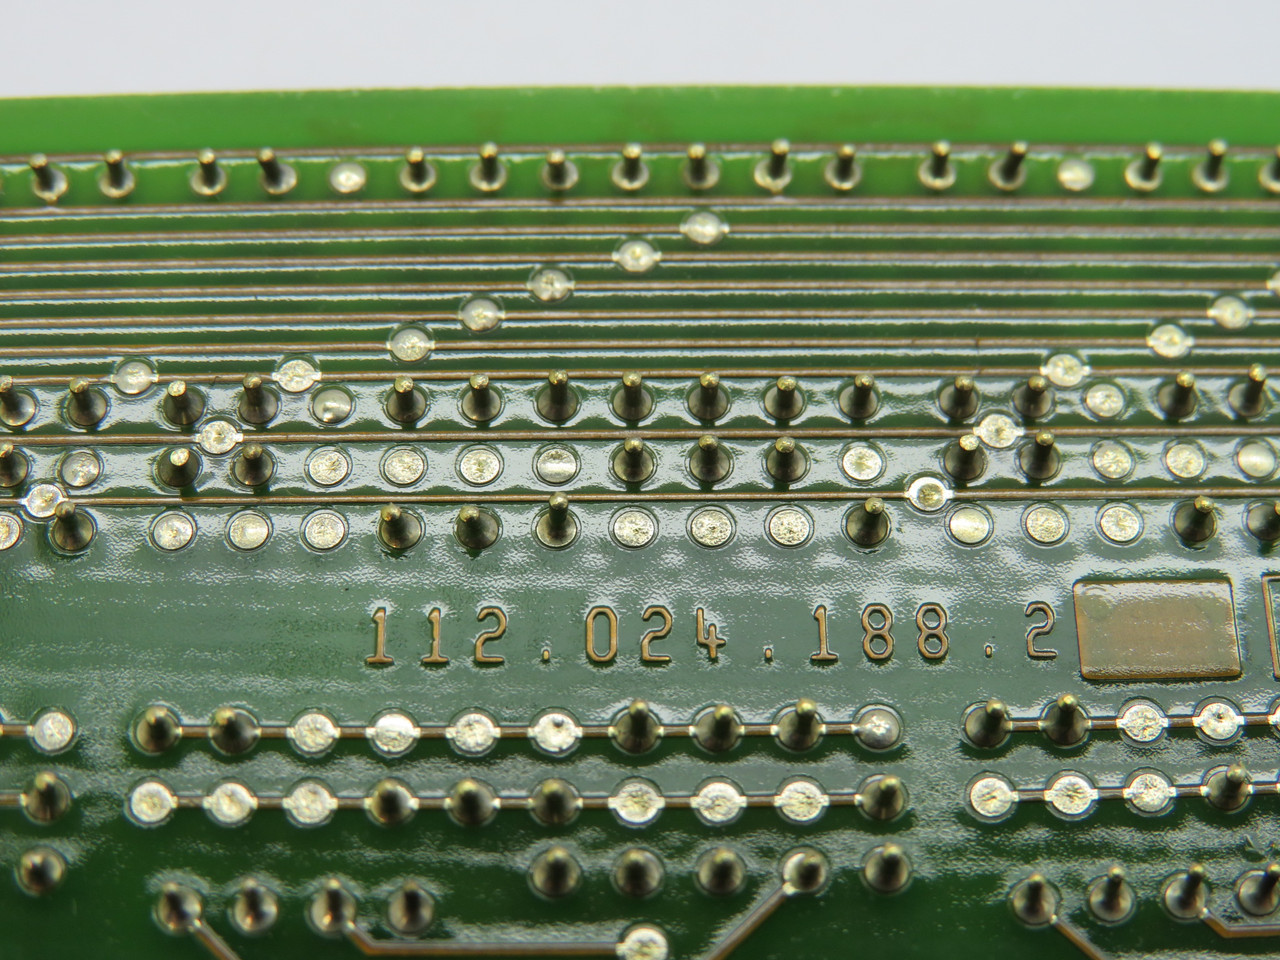 Sulzer Nipco MXX200/112.024.188.2 Matrix Control Board Round Amplifiers USED